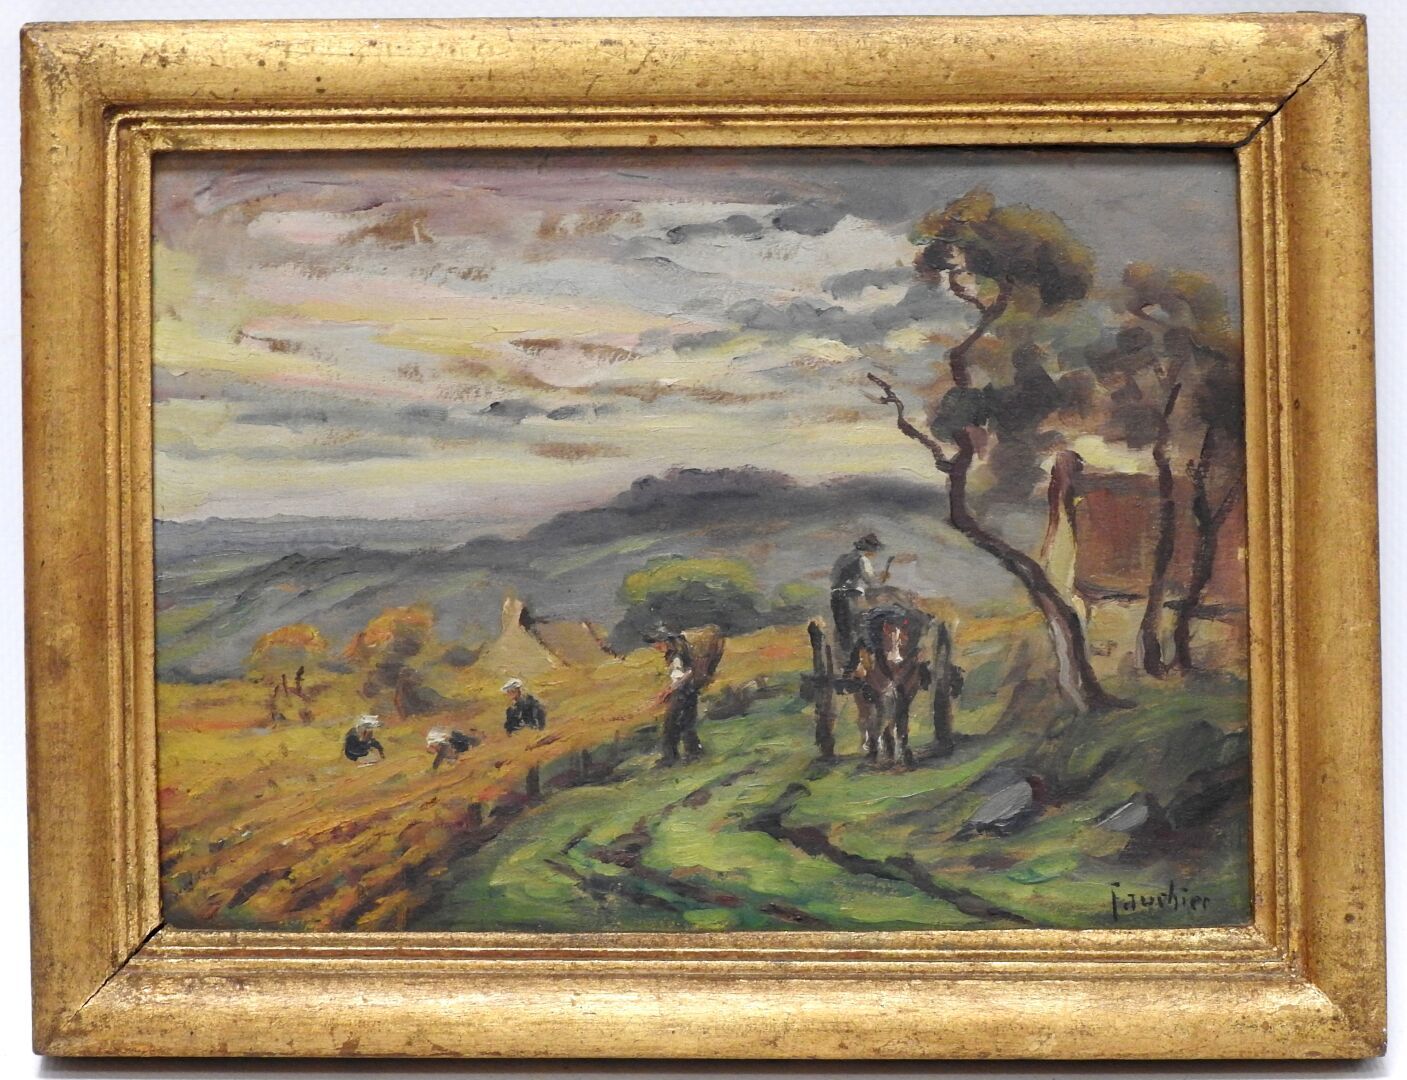 Null 夏尔-福喜尔 (1887-1965)
在田间工作
纸板上的油画。右下方有签名
16 x 22 cm